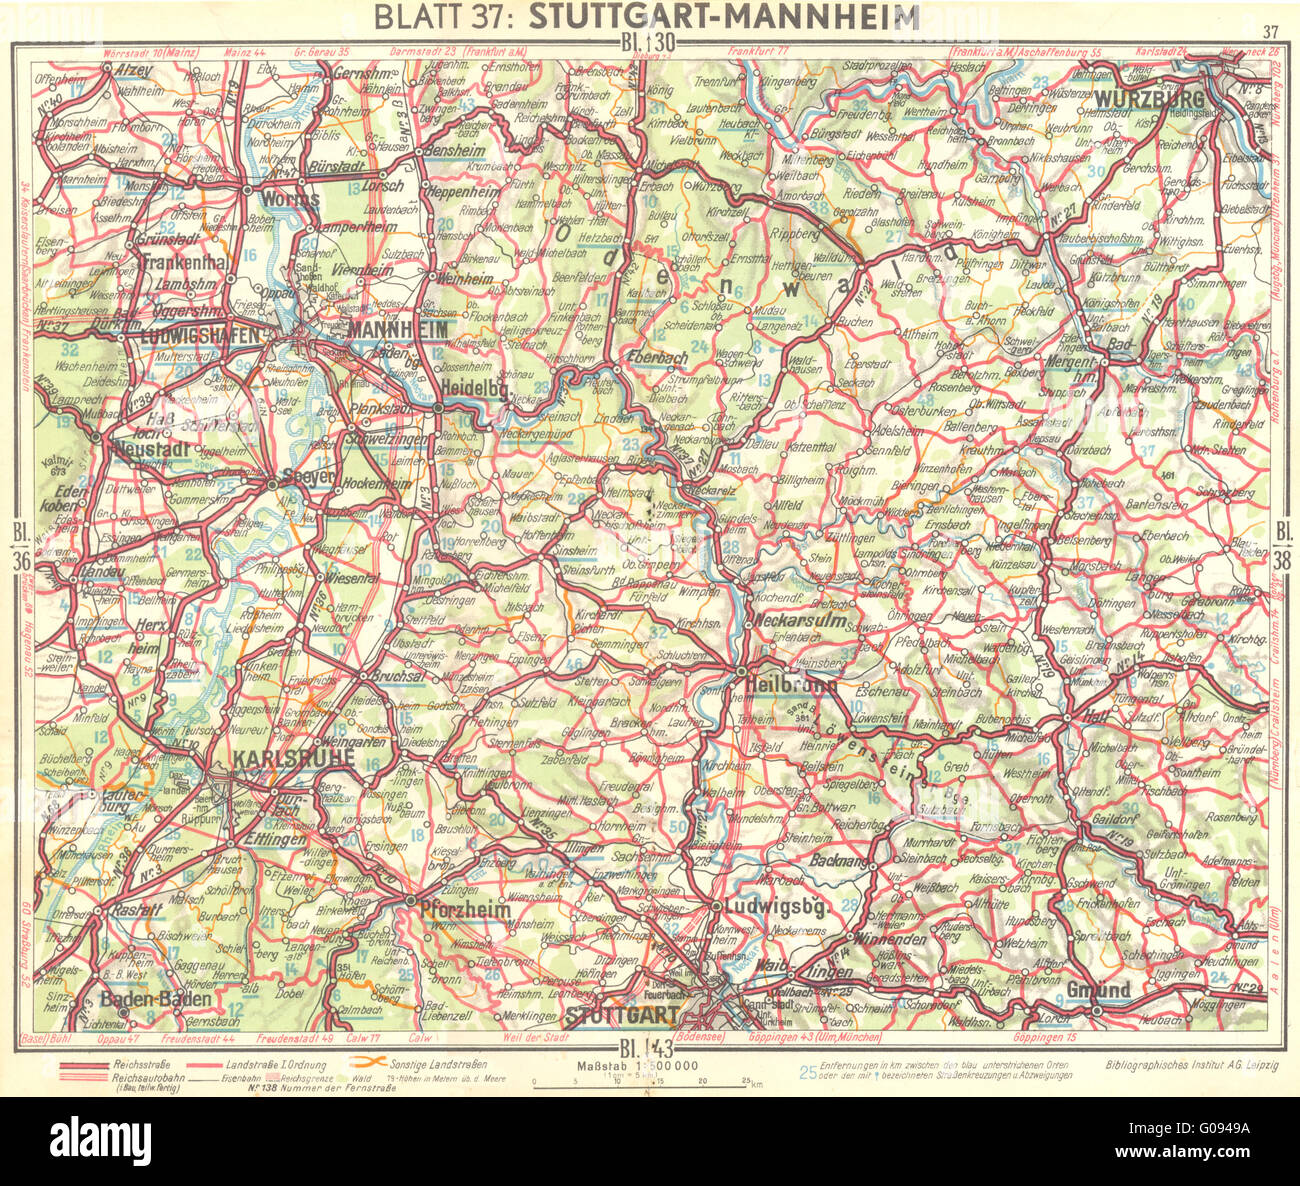 Alemania: Stuttgart-Mannheim, 1936 vintage mapa Foto de stock